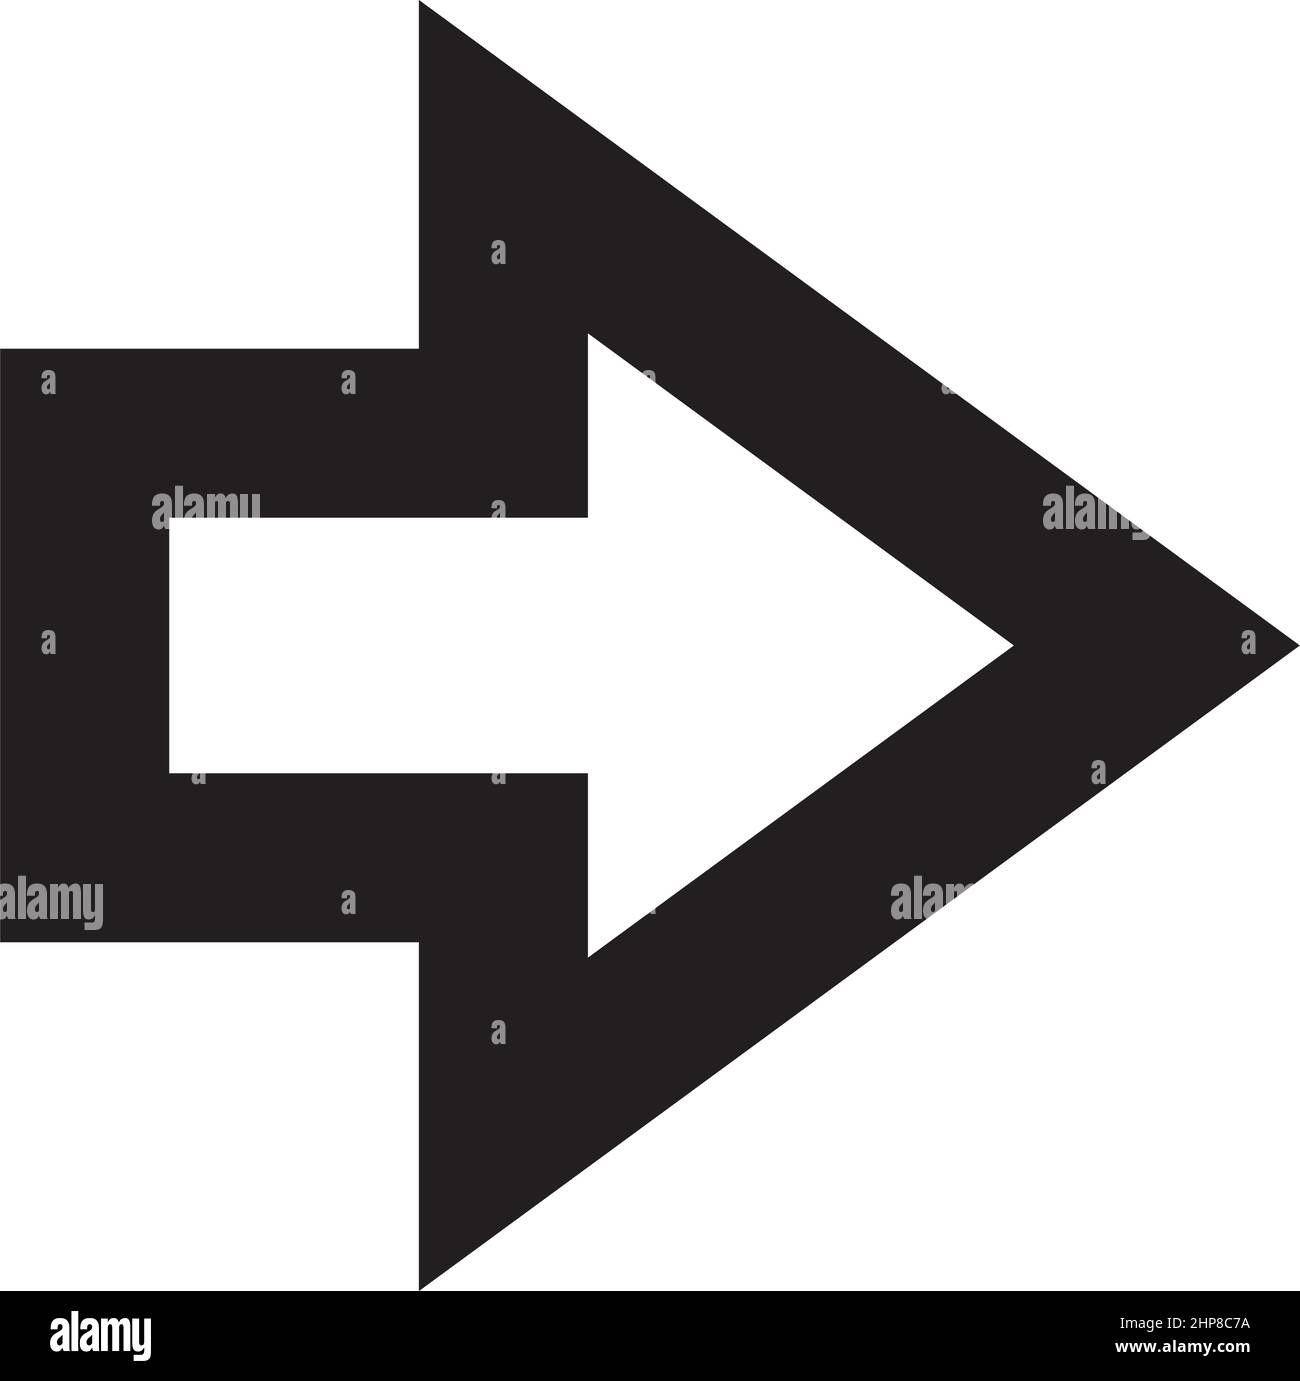 Pfeil Symbol Form Vektor-Symbol für kreative Grafik-Design ui-Element in einem Piktogramm Illustration Stock Vektor